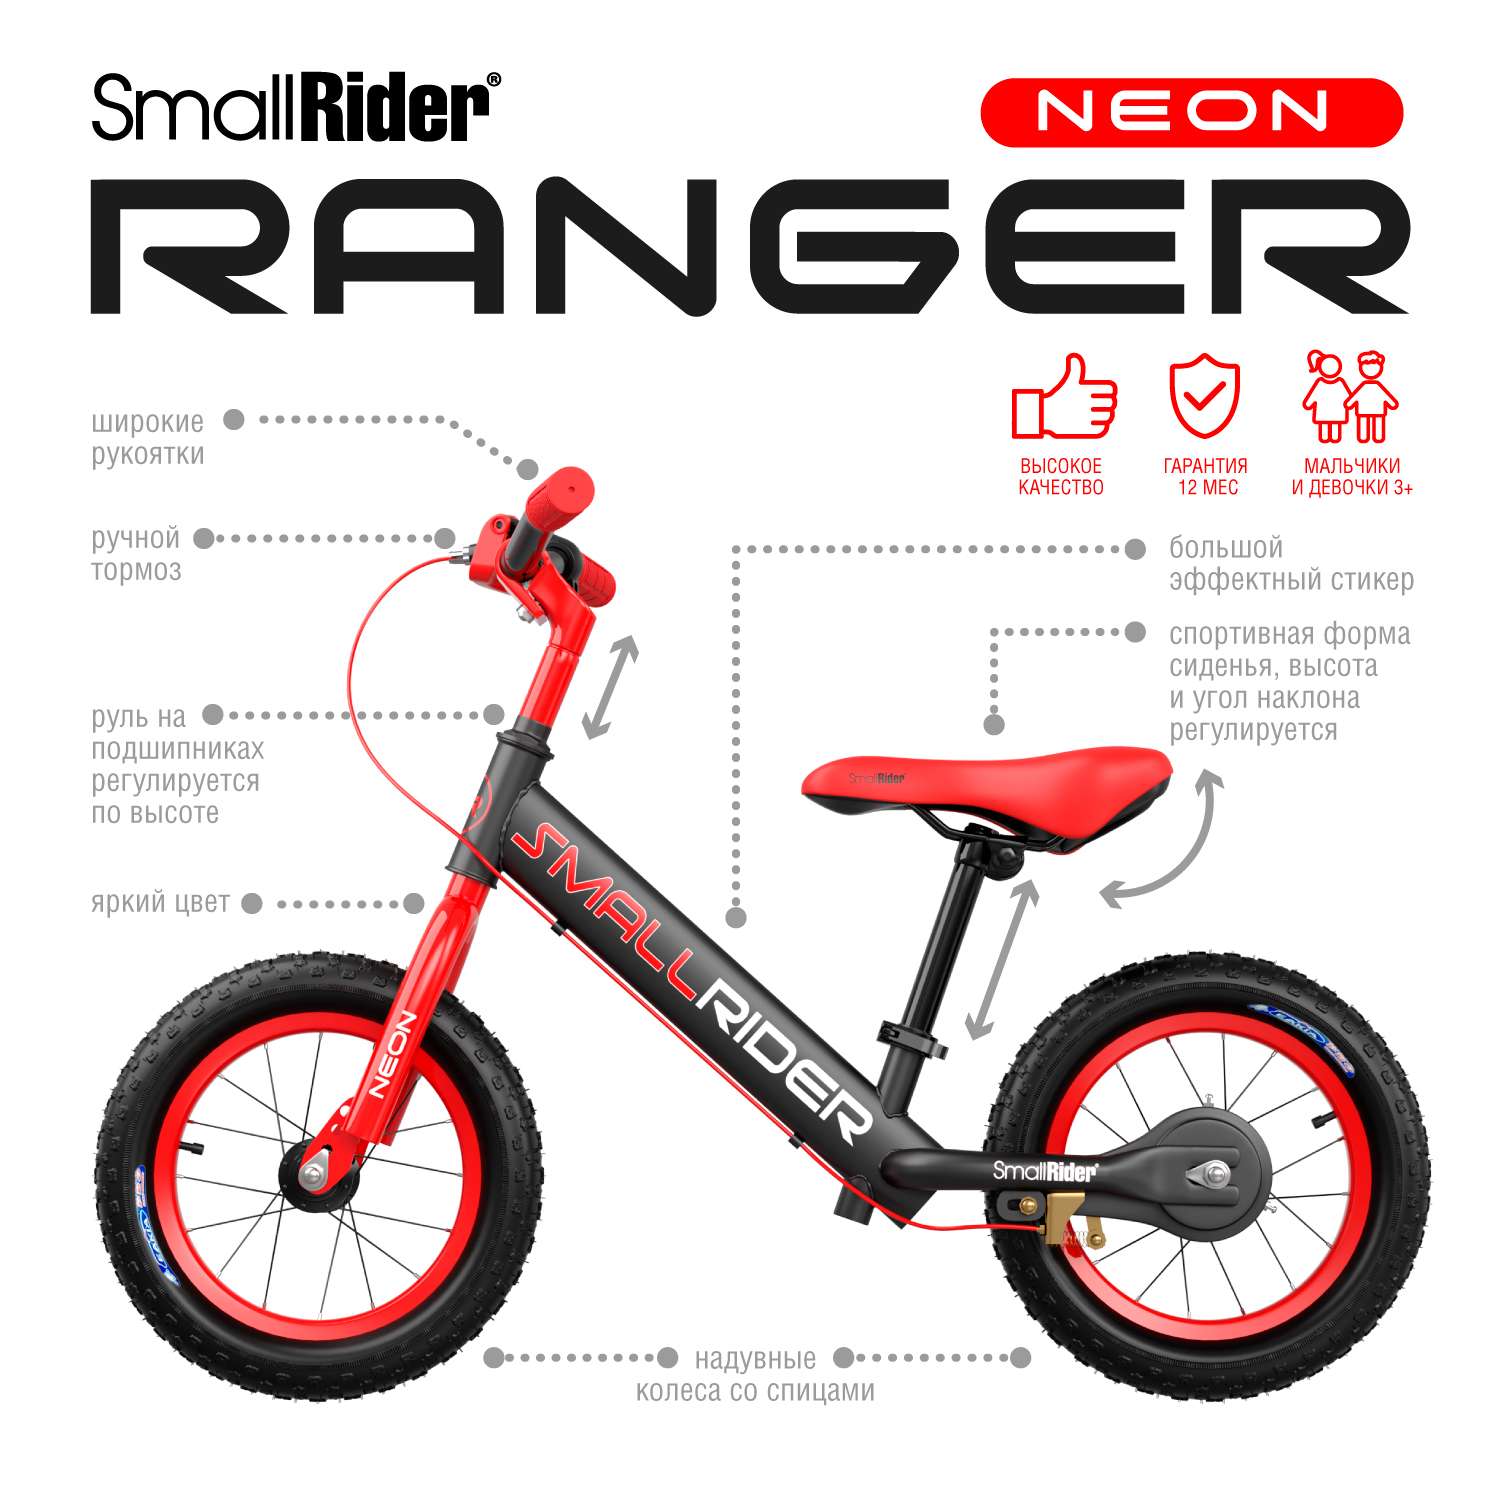 Беговел Small Rider Ranger 3 Neon R красный - фото 2